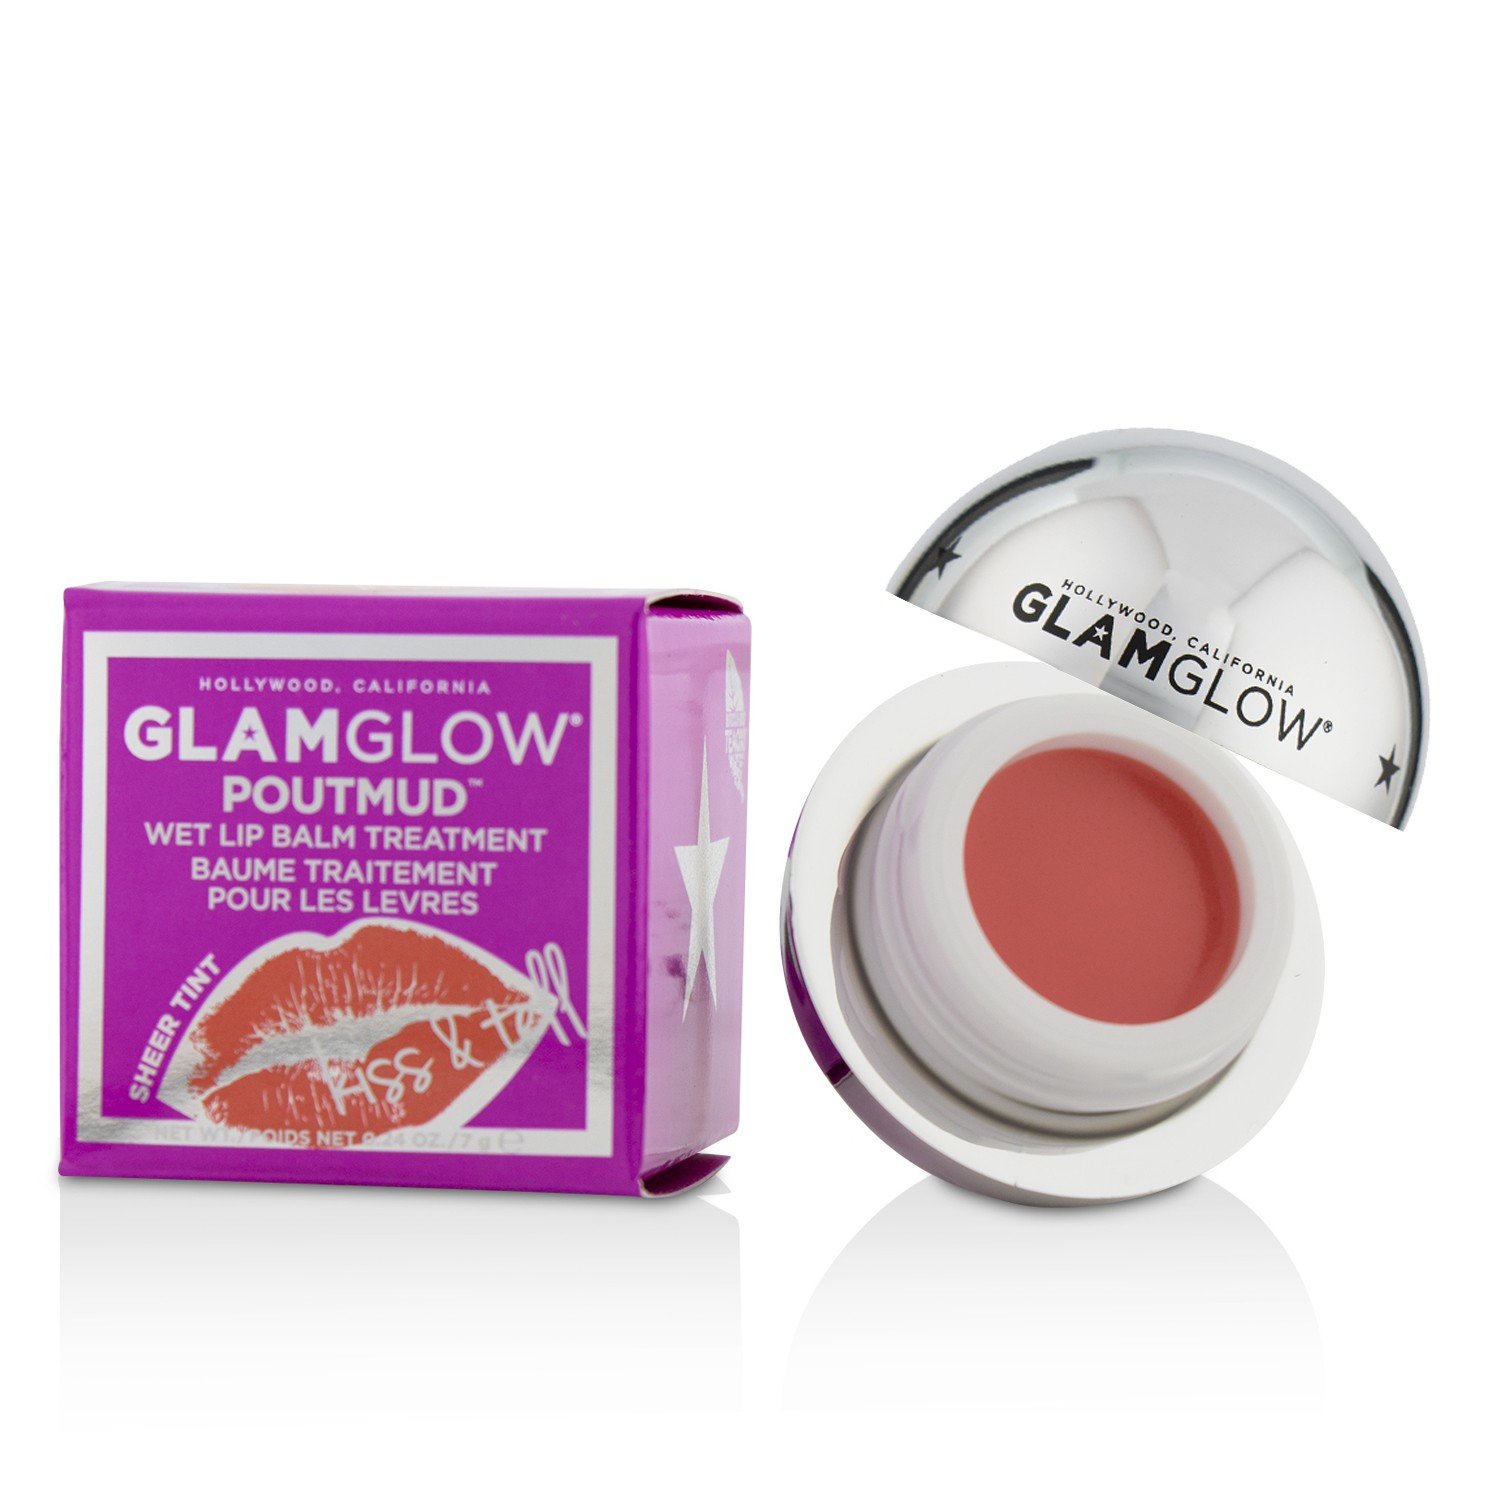 PoutMud Sheer Tint Wet Lip Balm Treatment - Kiss & Tell Glamglow Image